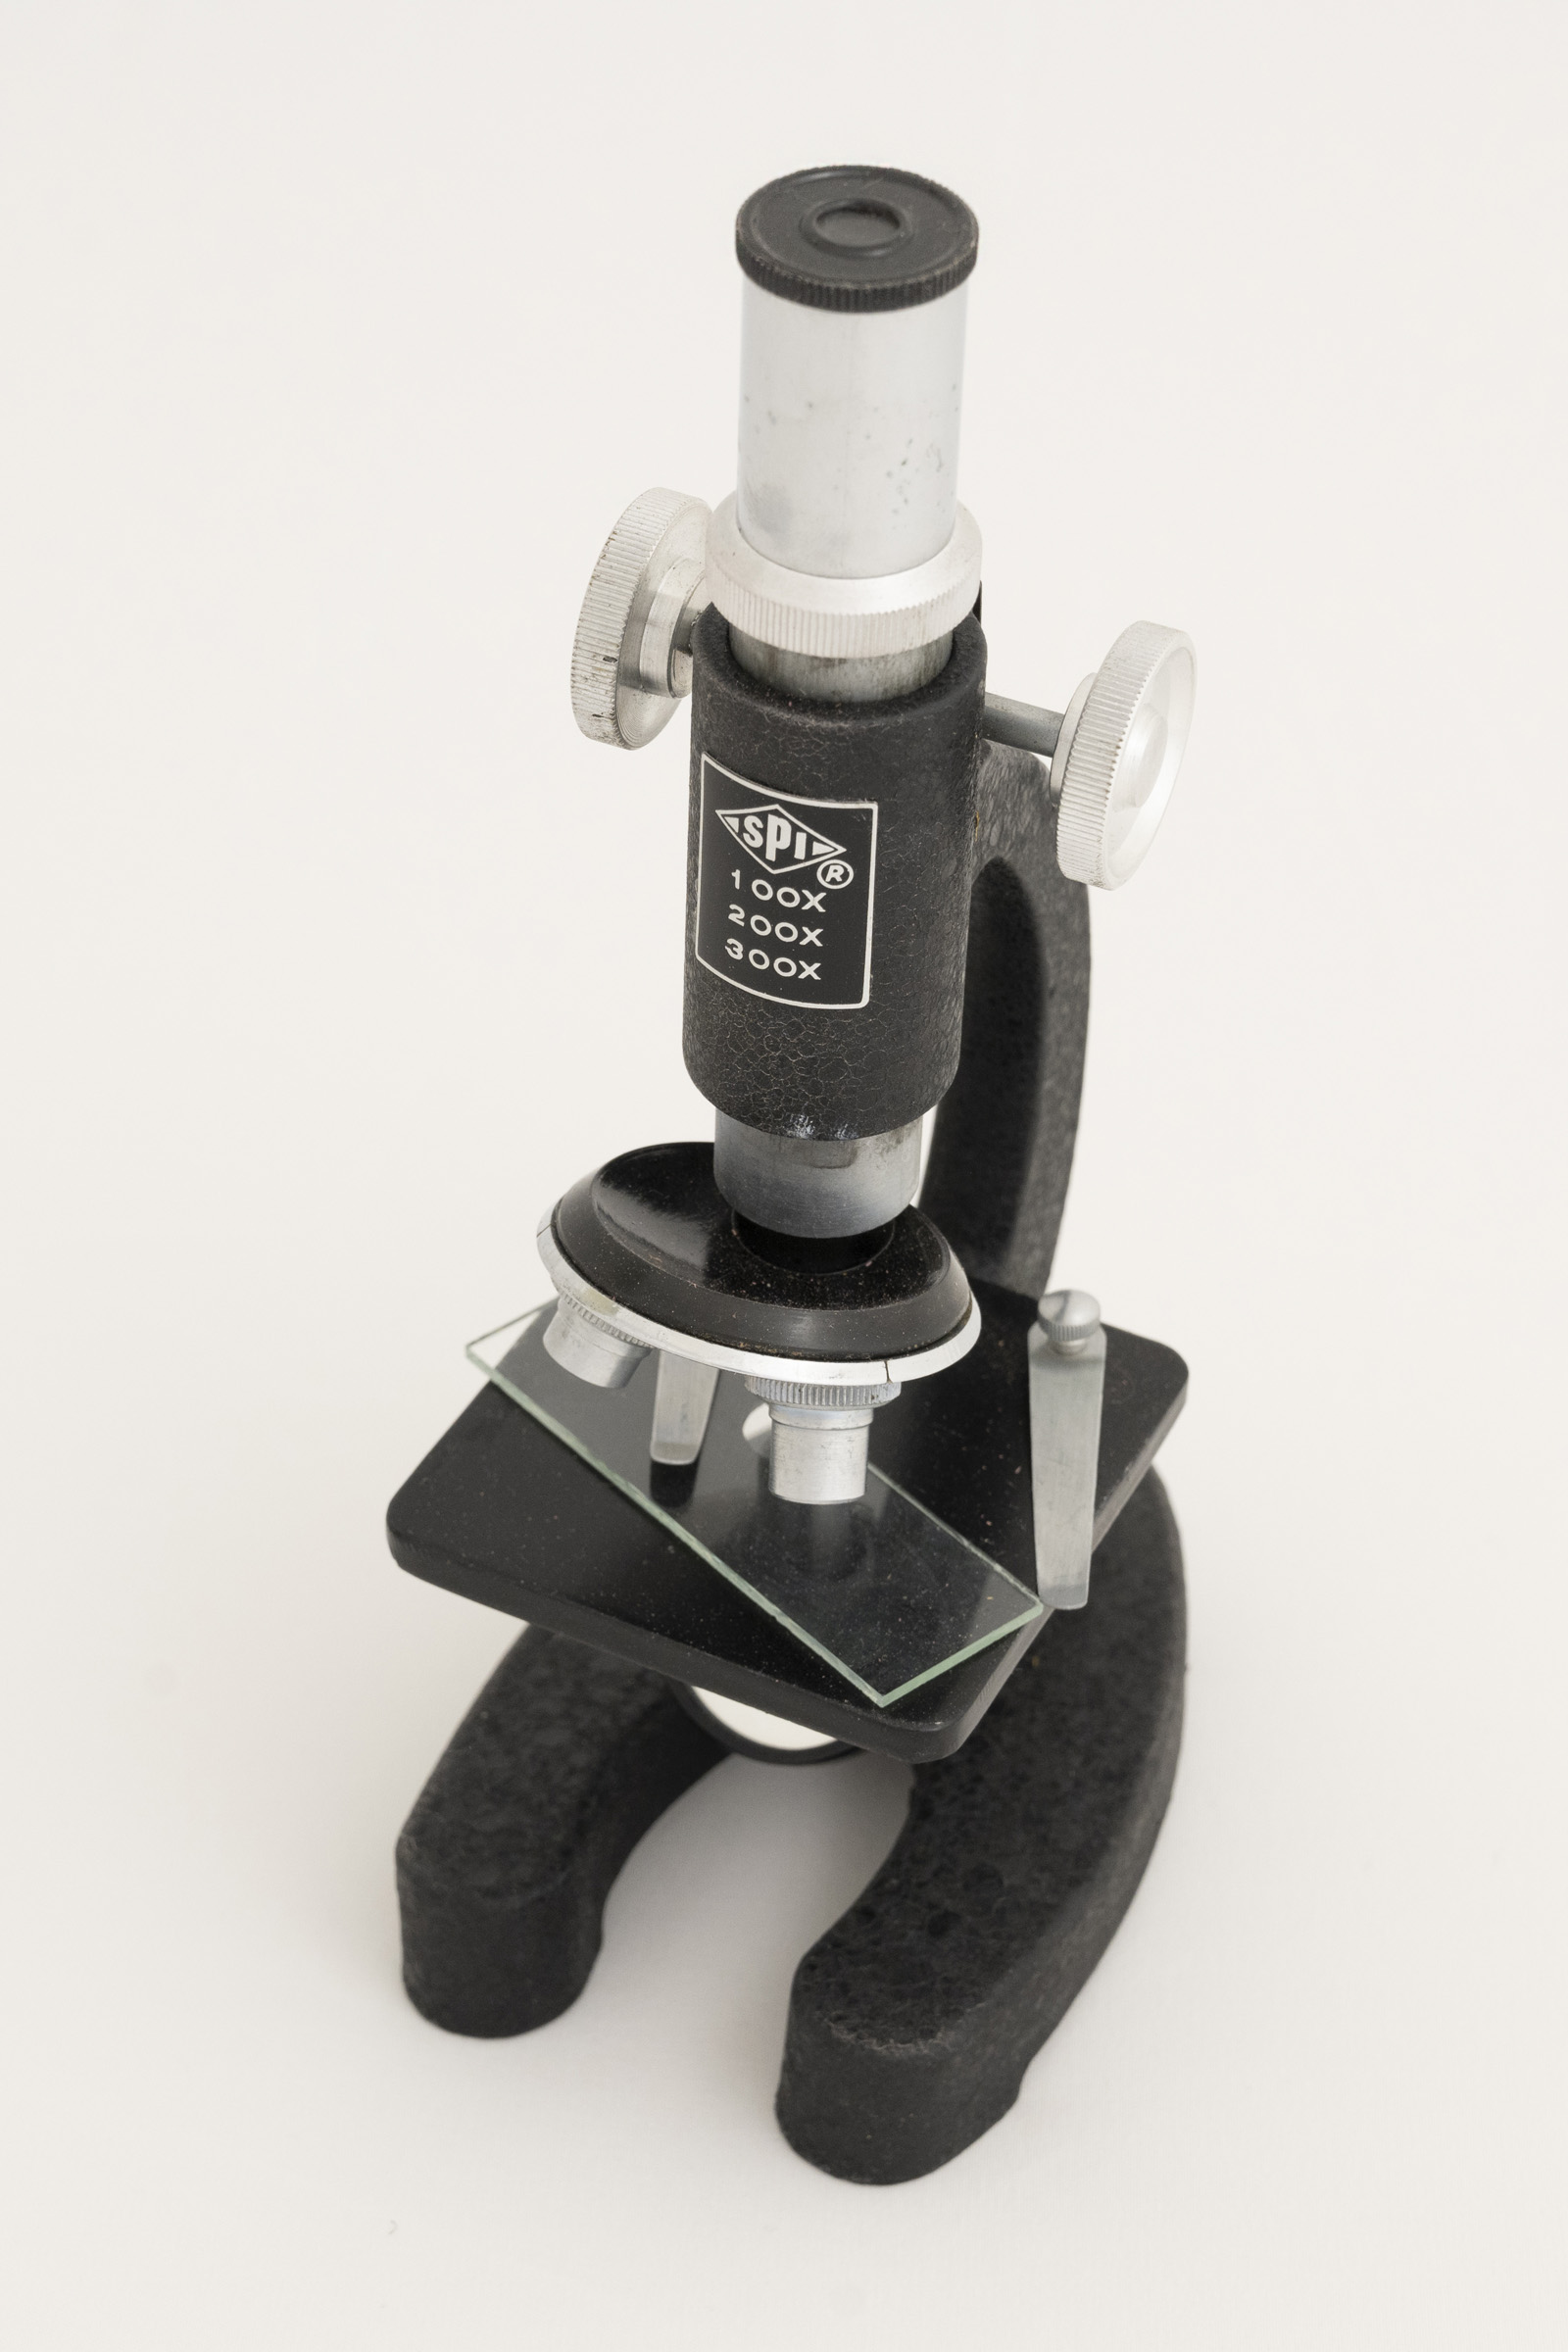 Small black and silver microscope